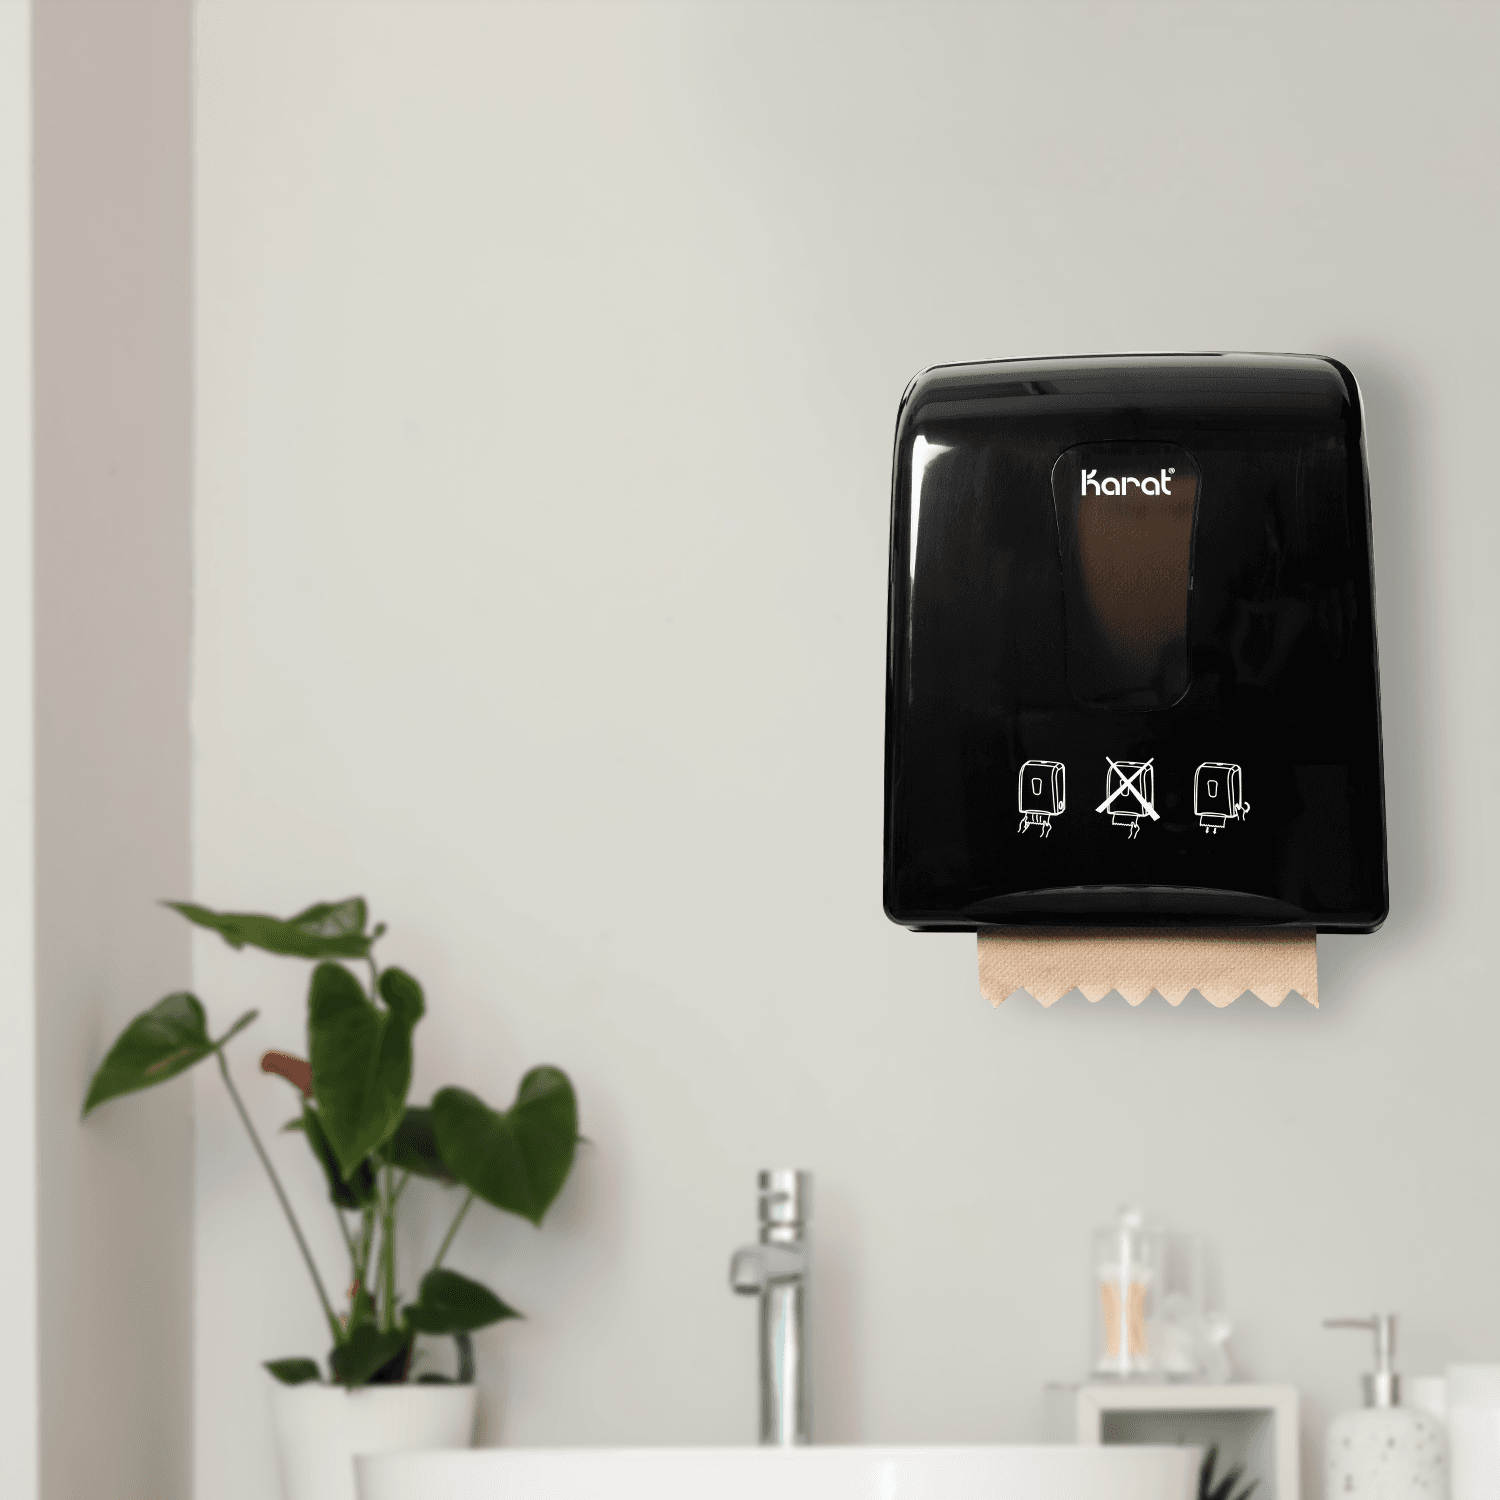 Karat Auto-Cut Roll Towel Dispenser, Black - 1 unit